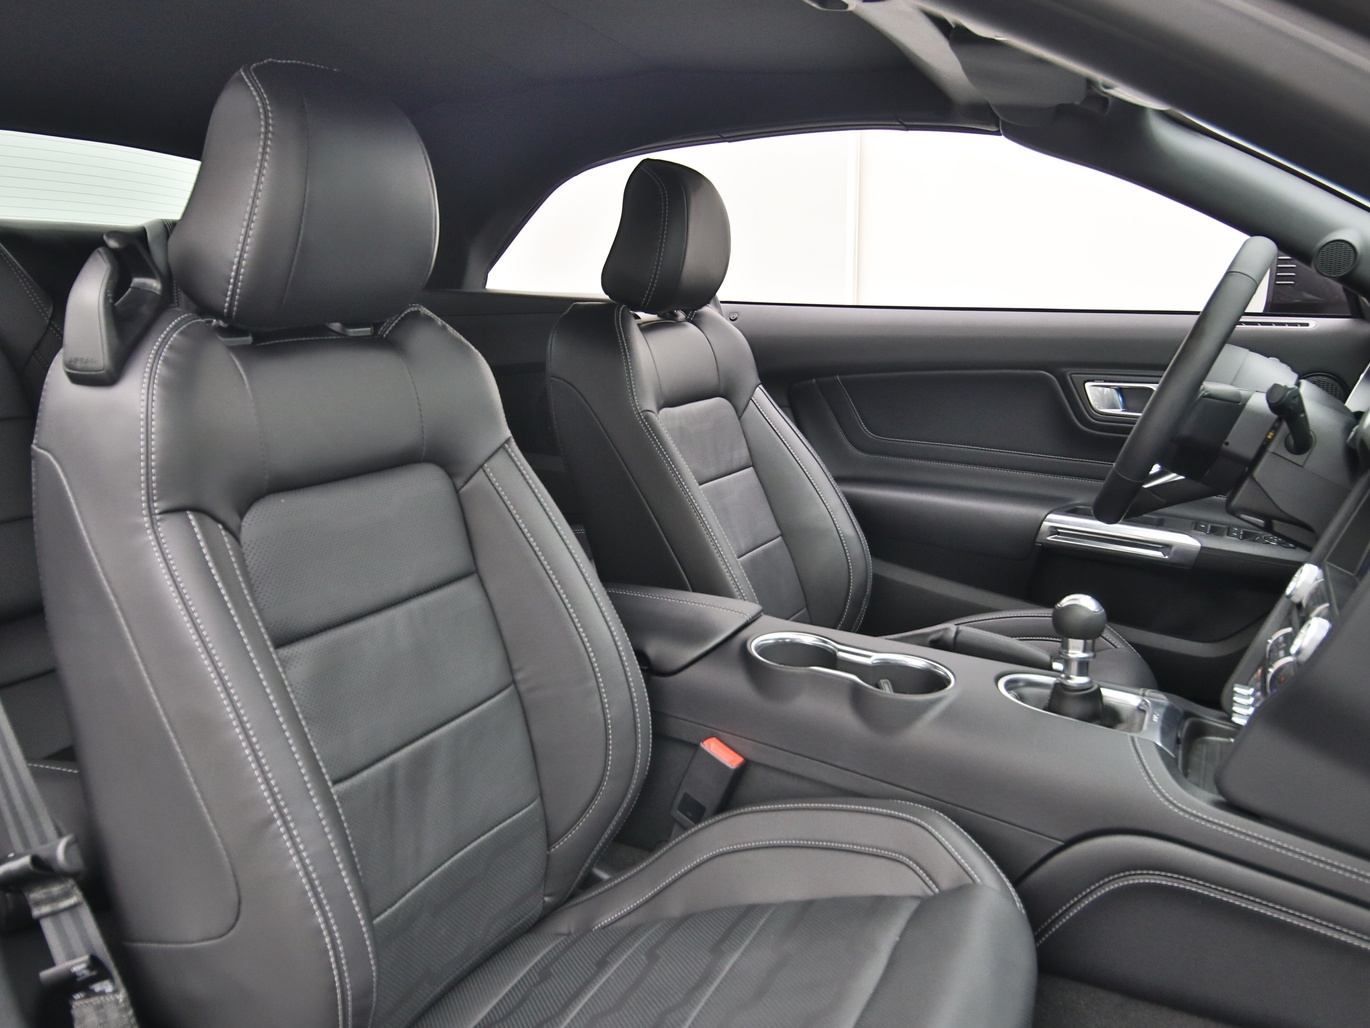  Ford Mustang GT Cabrio V8 450PS / Premium 2 / B&O in Dark Matter Grey 